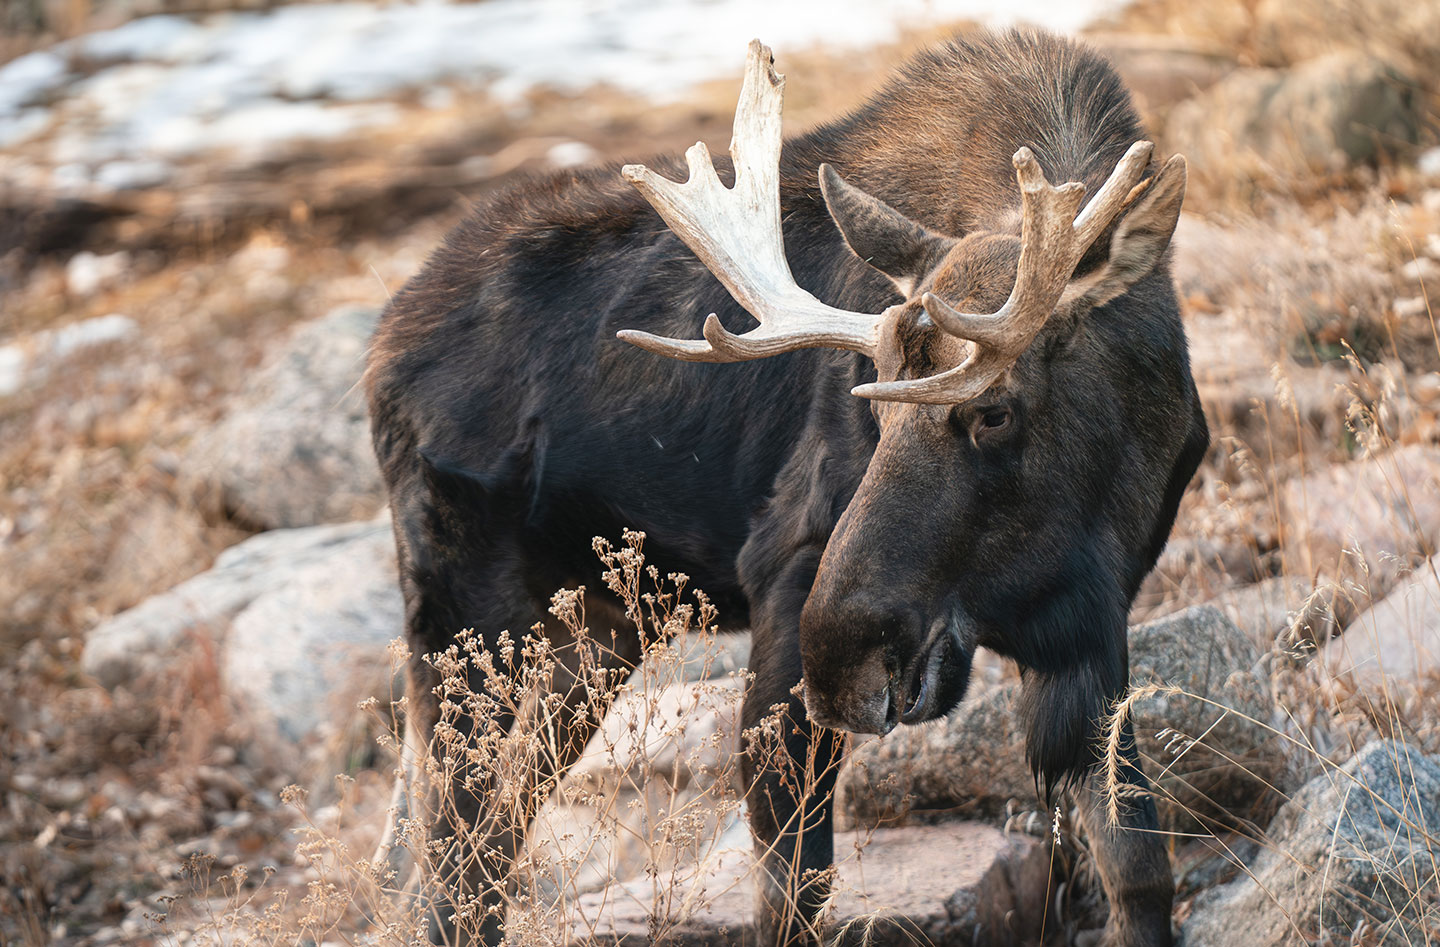 Atka, Alaska moose standing in his area